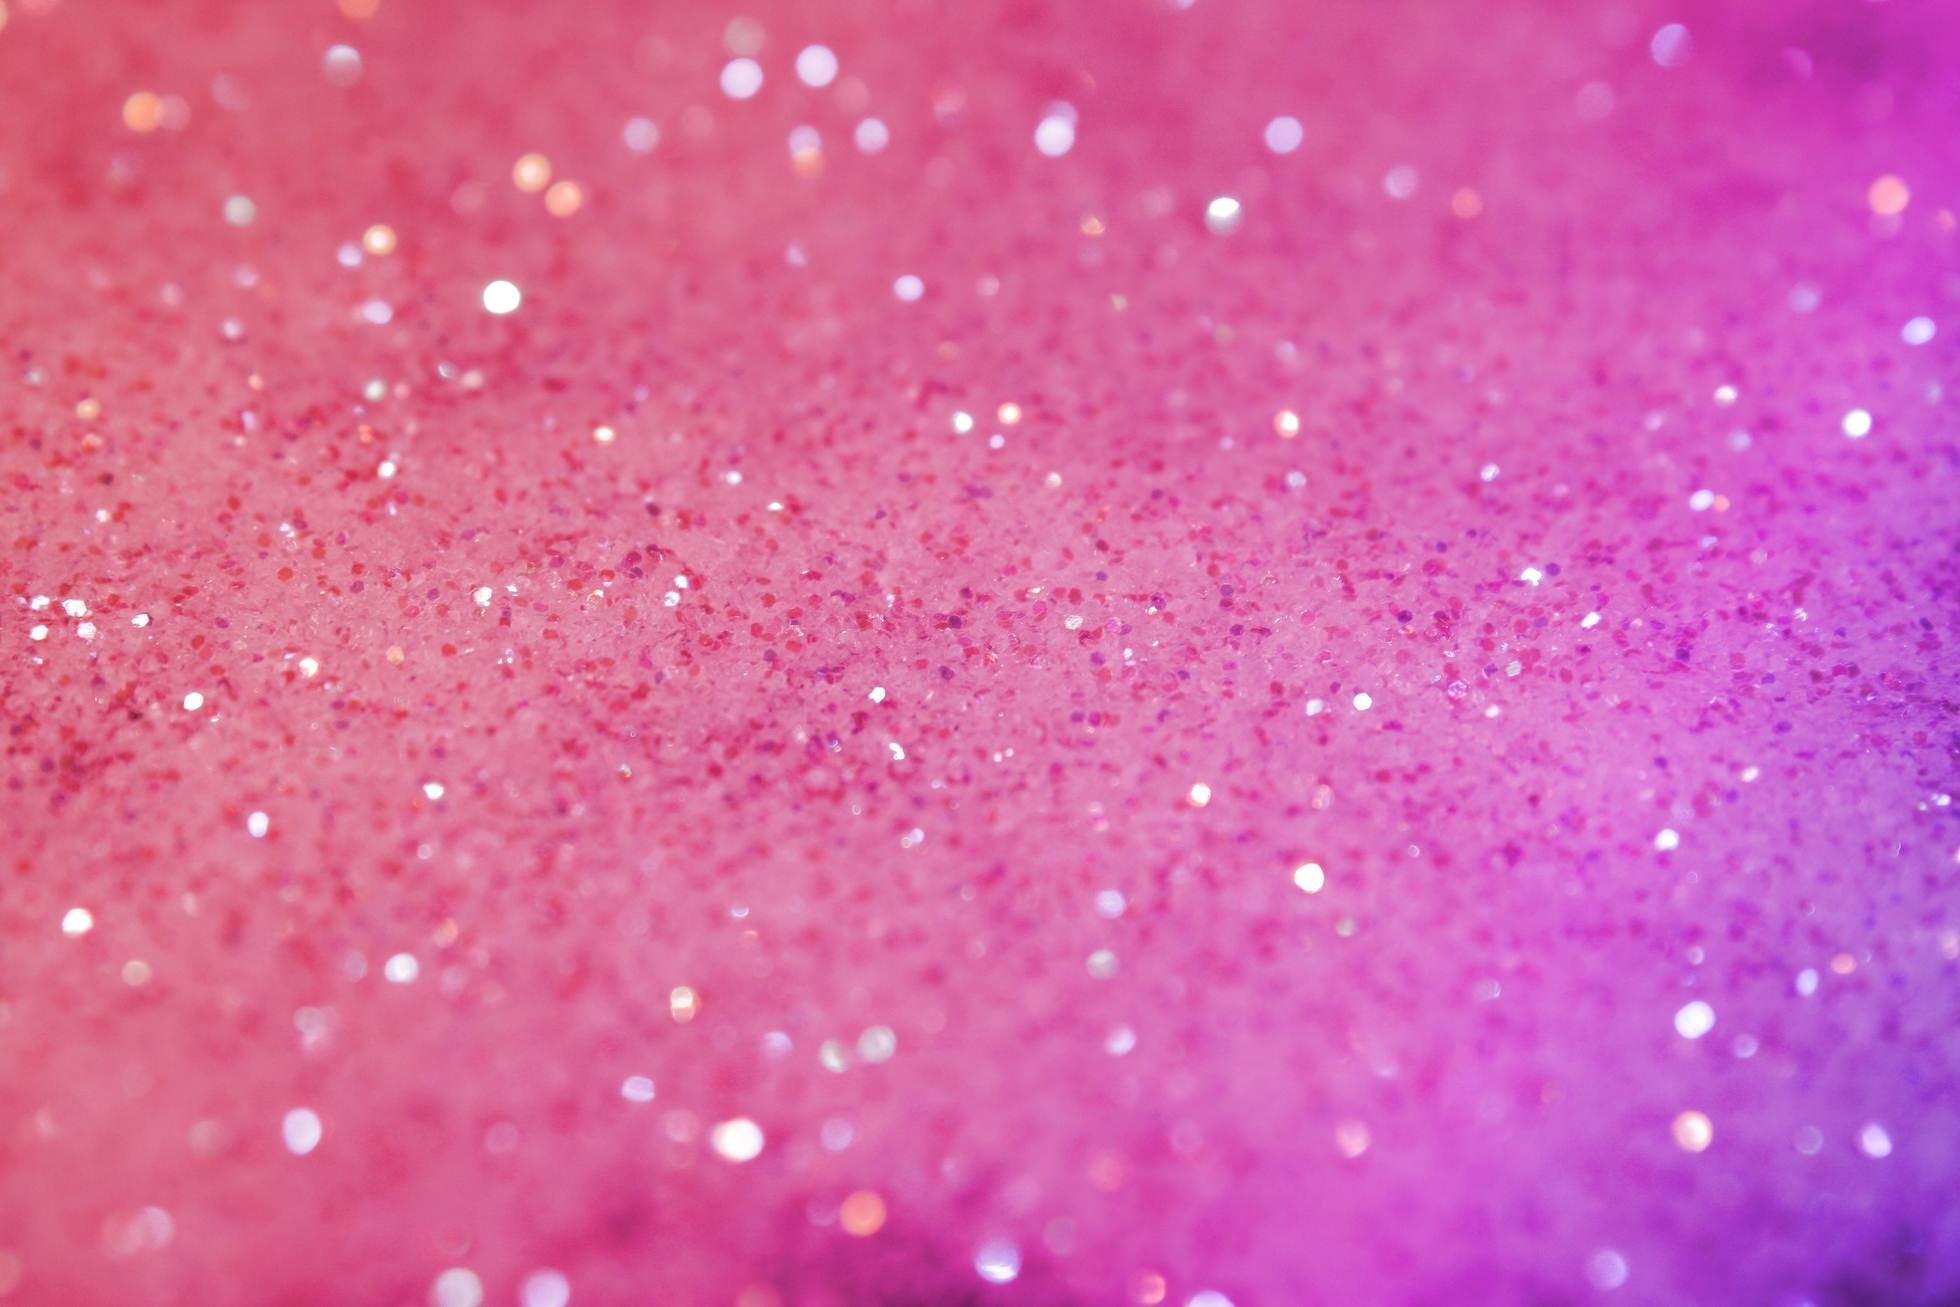 Glitter Tumblr Background. FreeCreatives. Pink glitter wallpaper